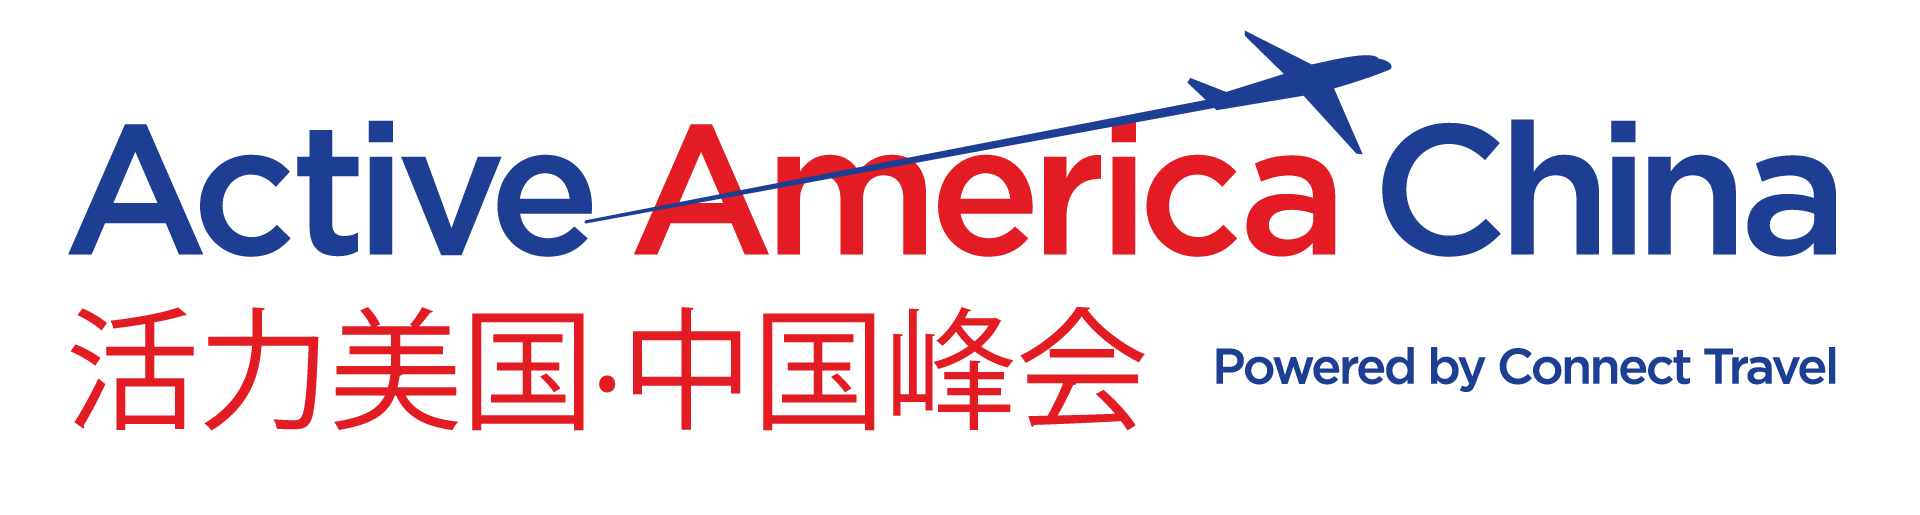 Active America China